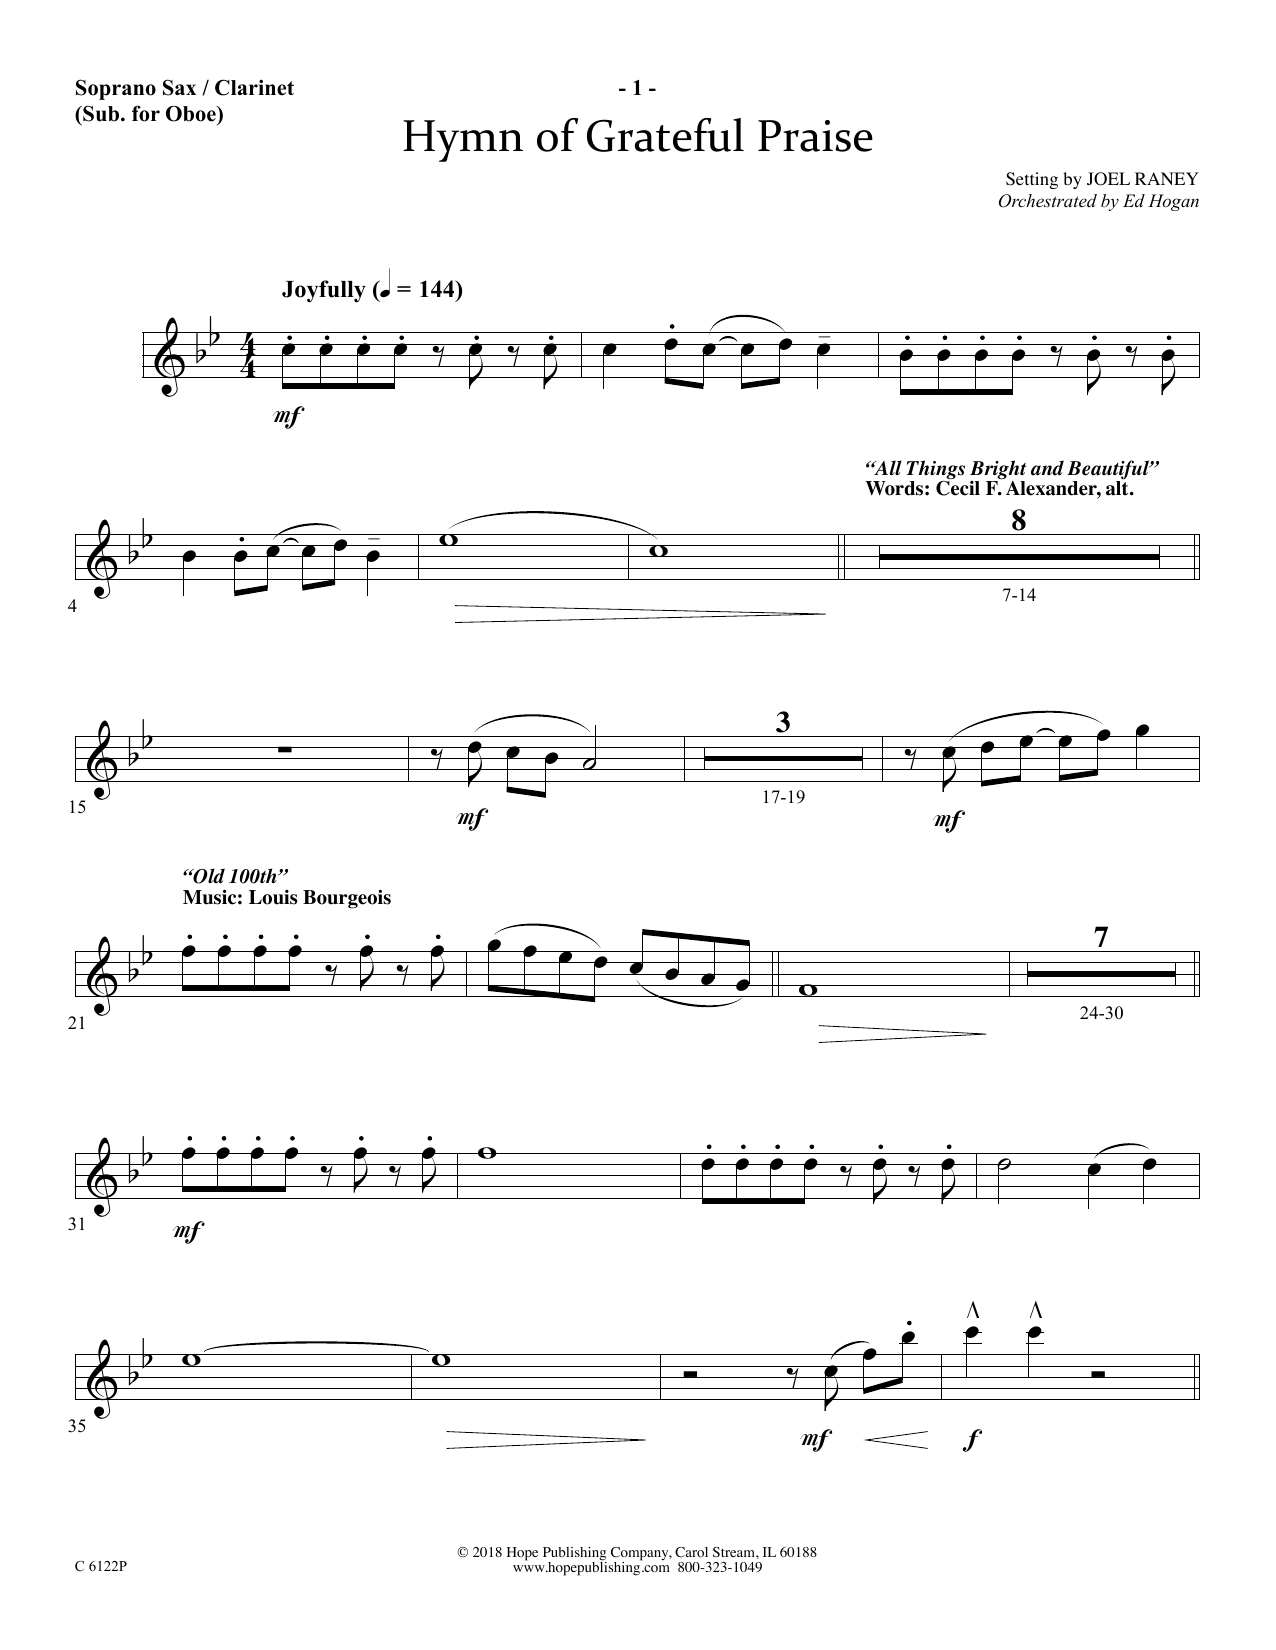 Joel Raney Hymn Of Grateful Praise - Soprano Sax/Clarinet(sub oboe) Sheet Music Notes & Chords for Choir Instrumental Pak - Download or Print PDF